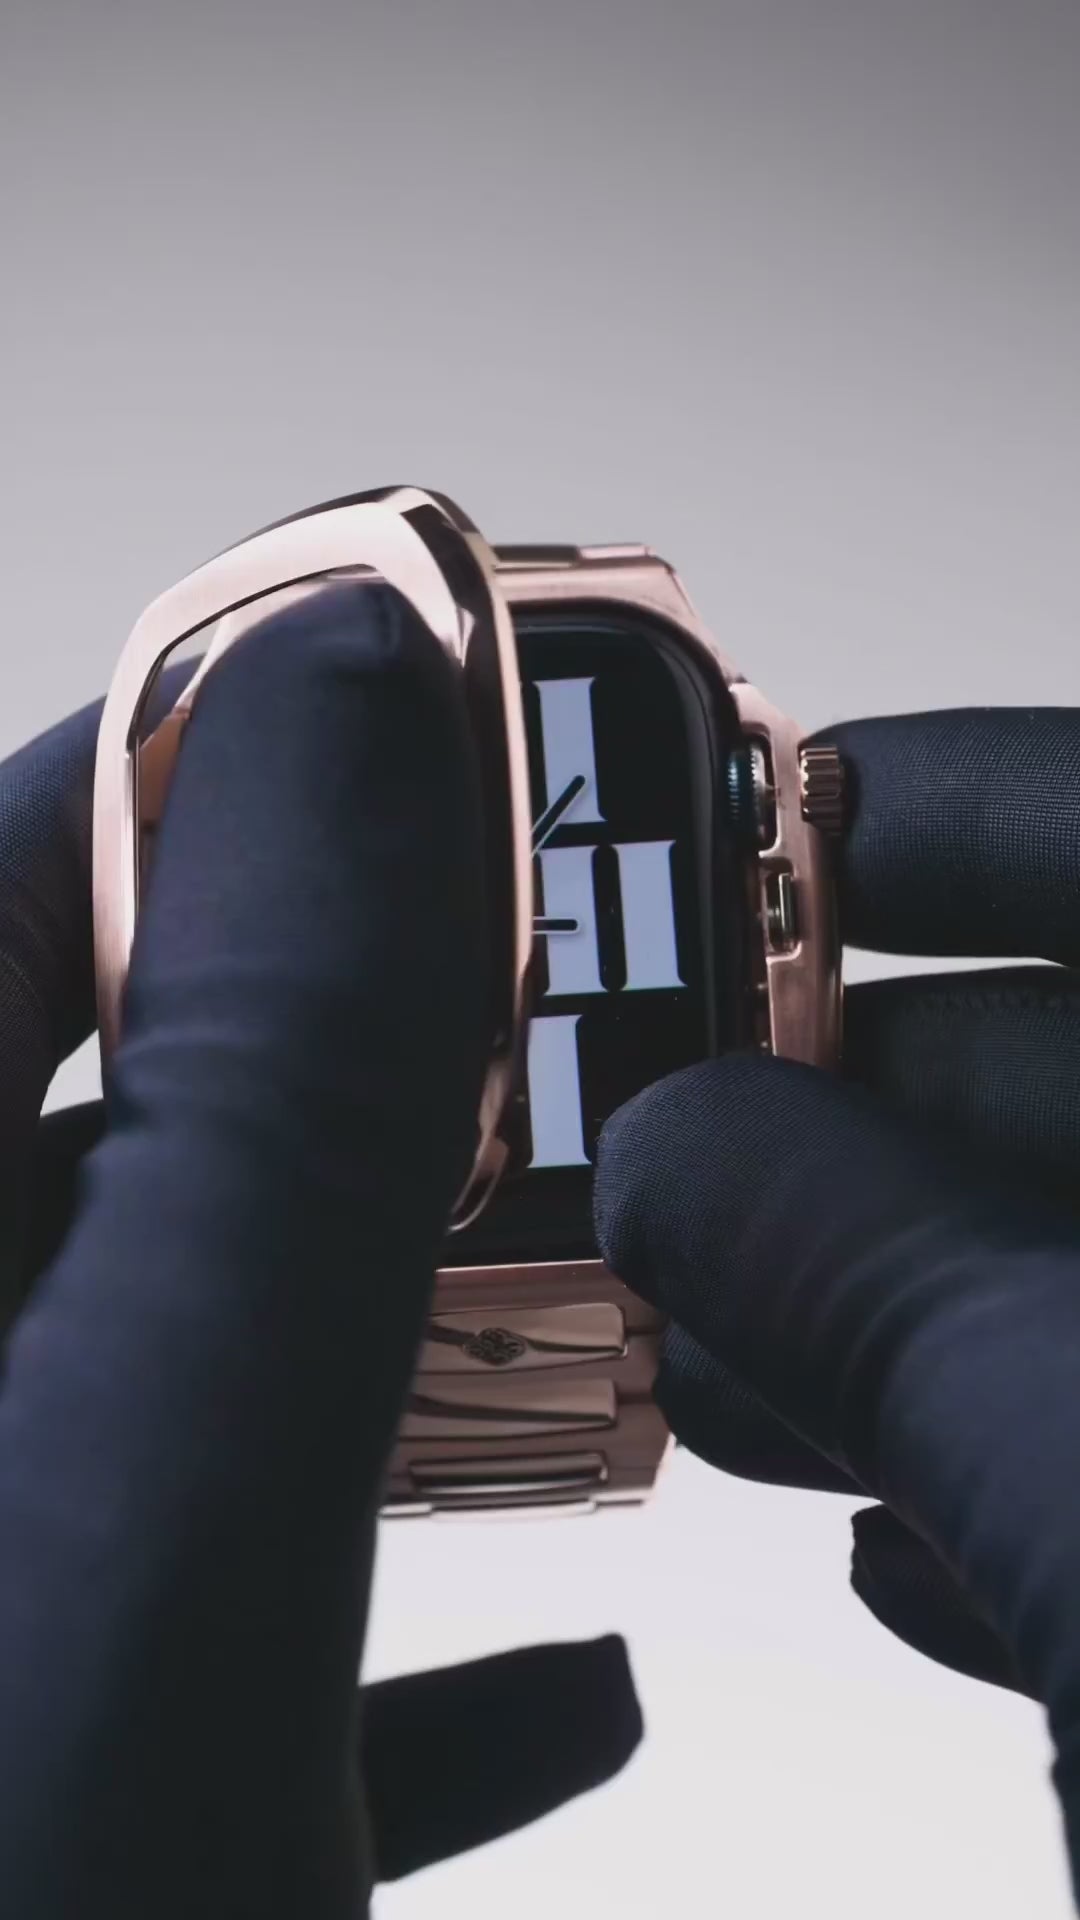 Apple Watch 7 - 9 錶殼 - 皇家 - 玫瑰金